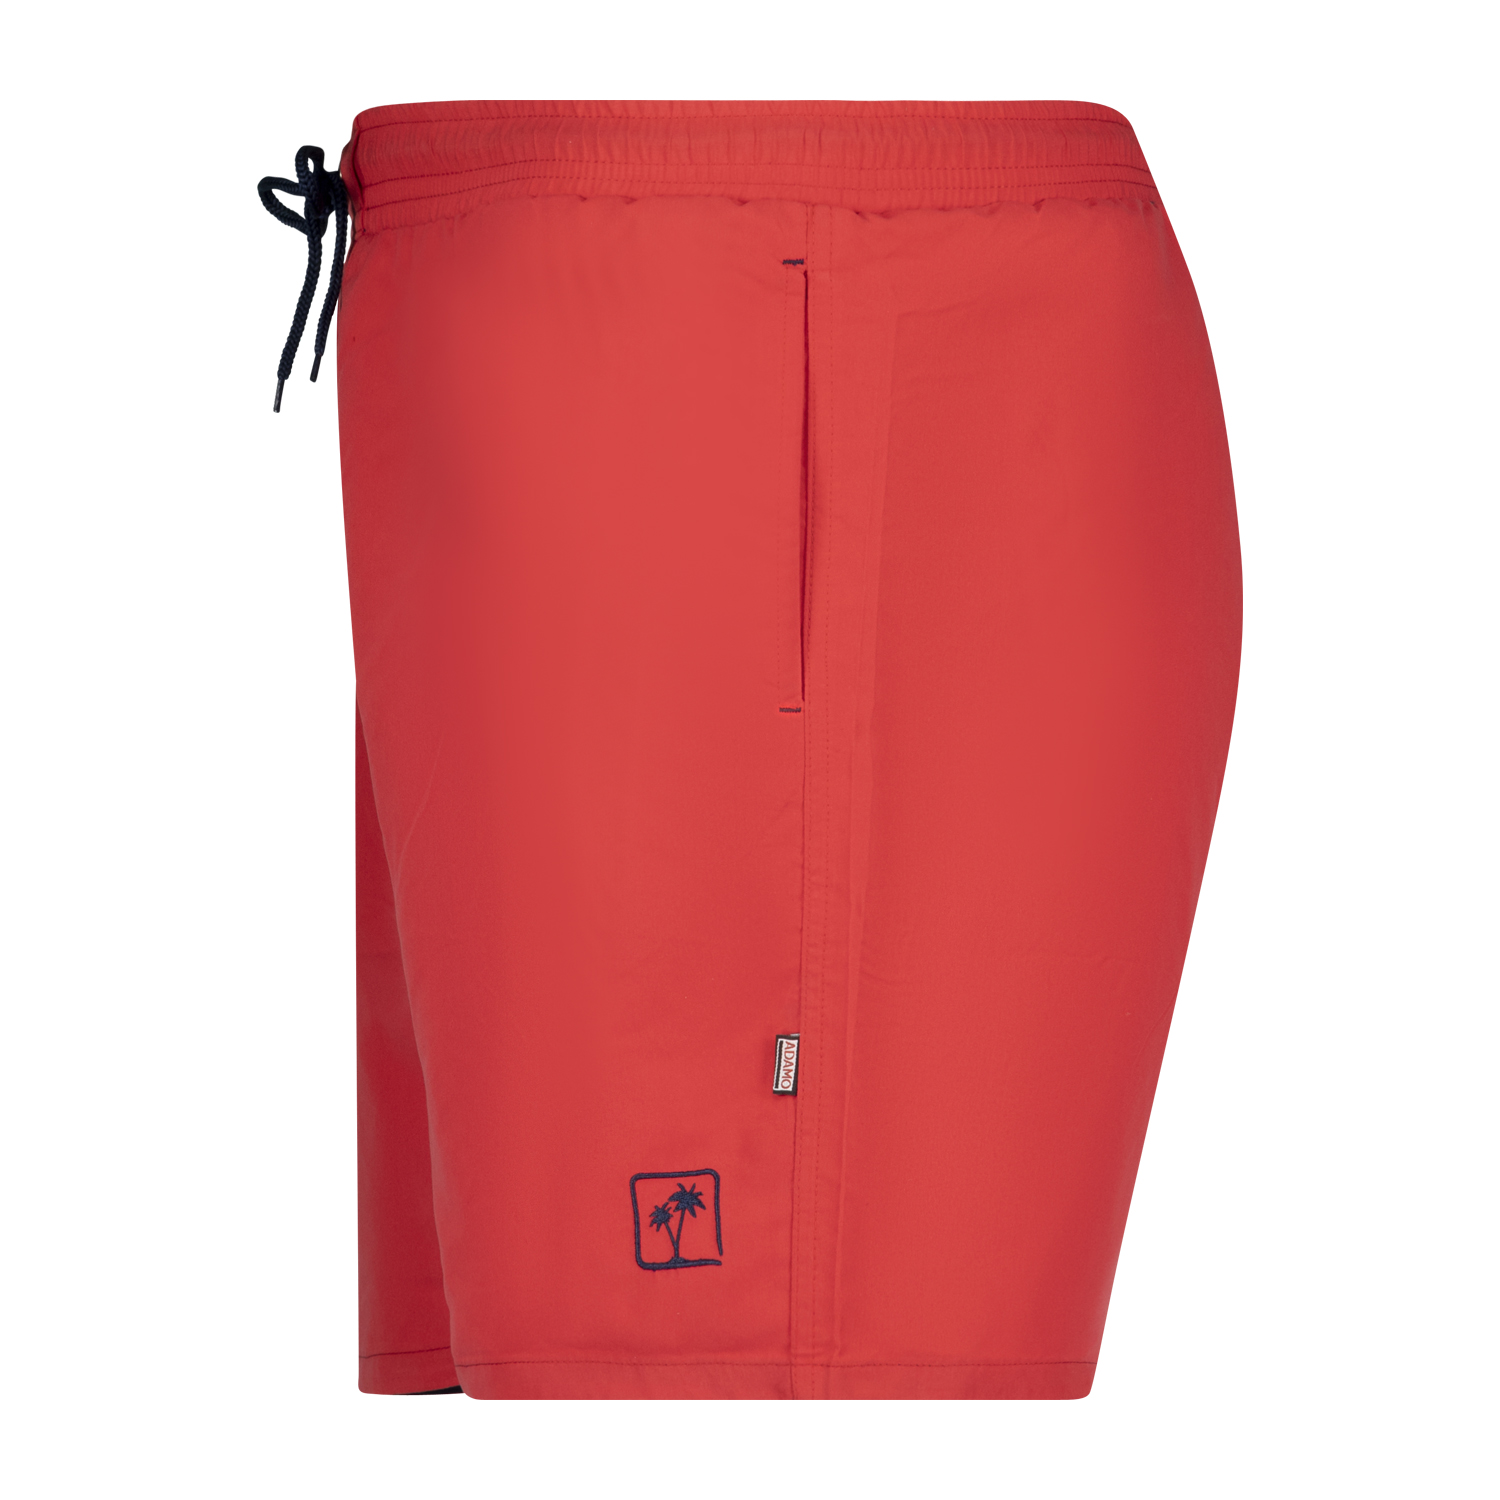 Beach bermuda shorts "Kuba" for men by Adamo in red up to oversize 12XL